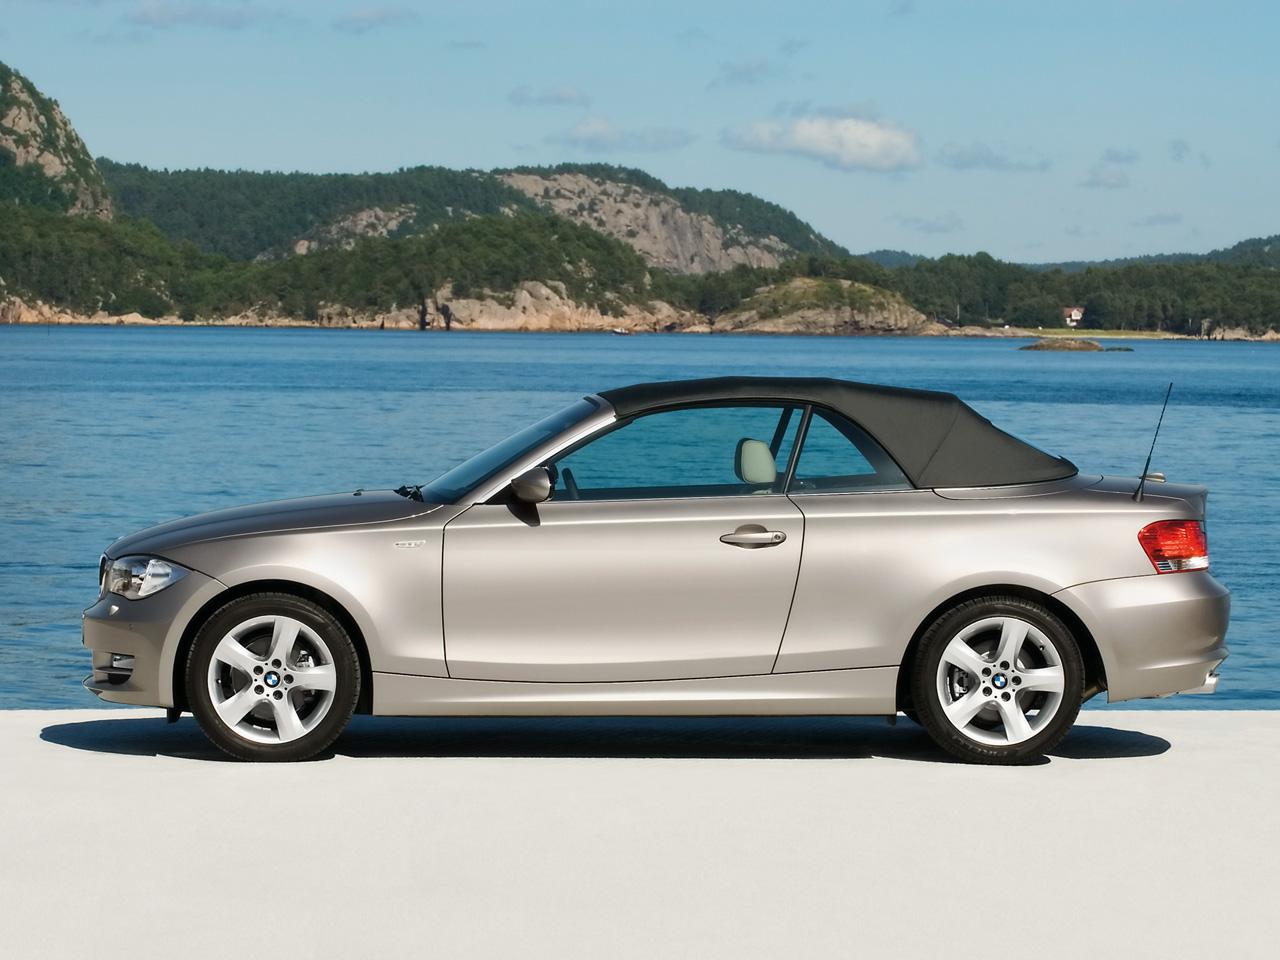 08-BMW-1-Series-Convertible-Folding-Top-5-1280x960.jpg